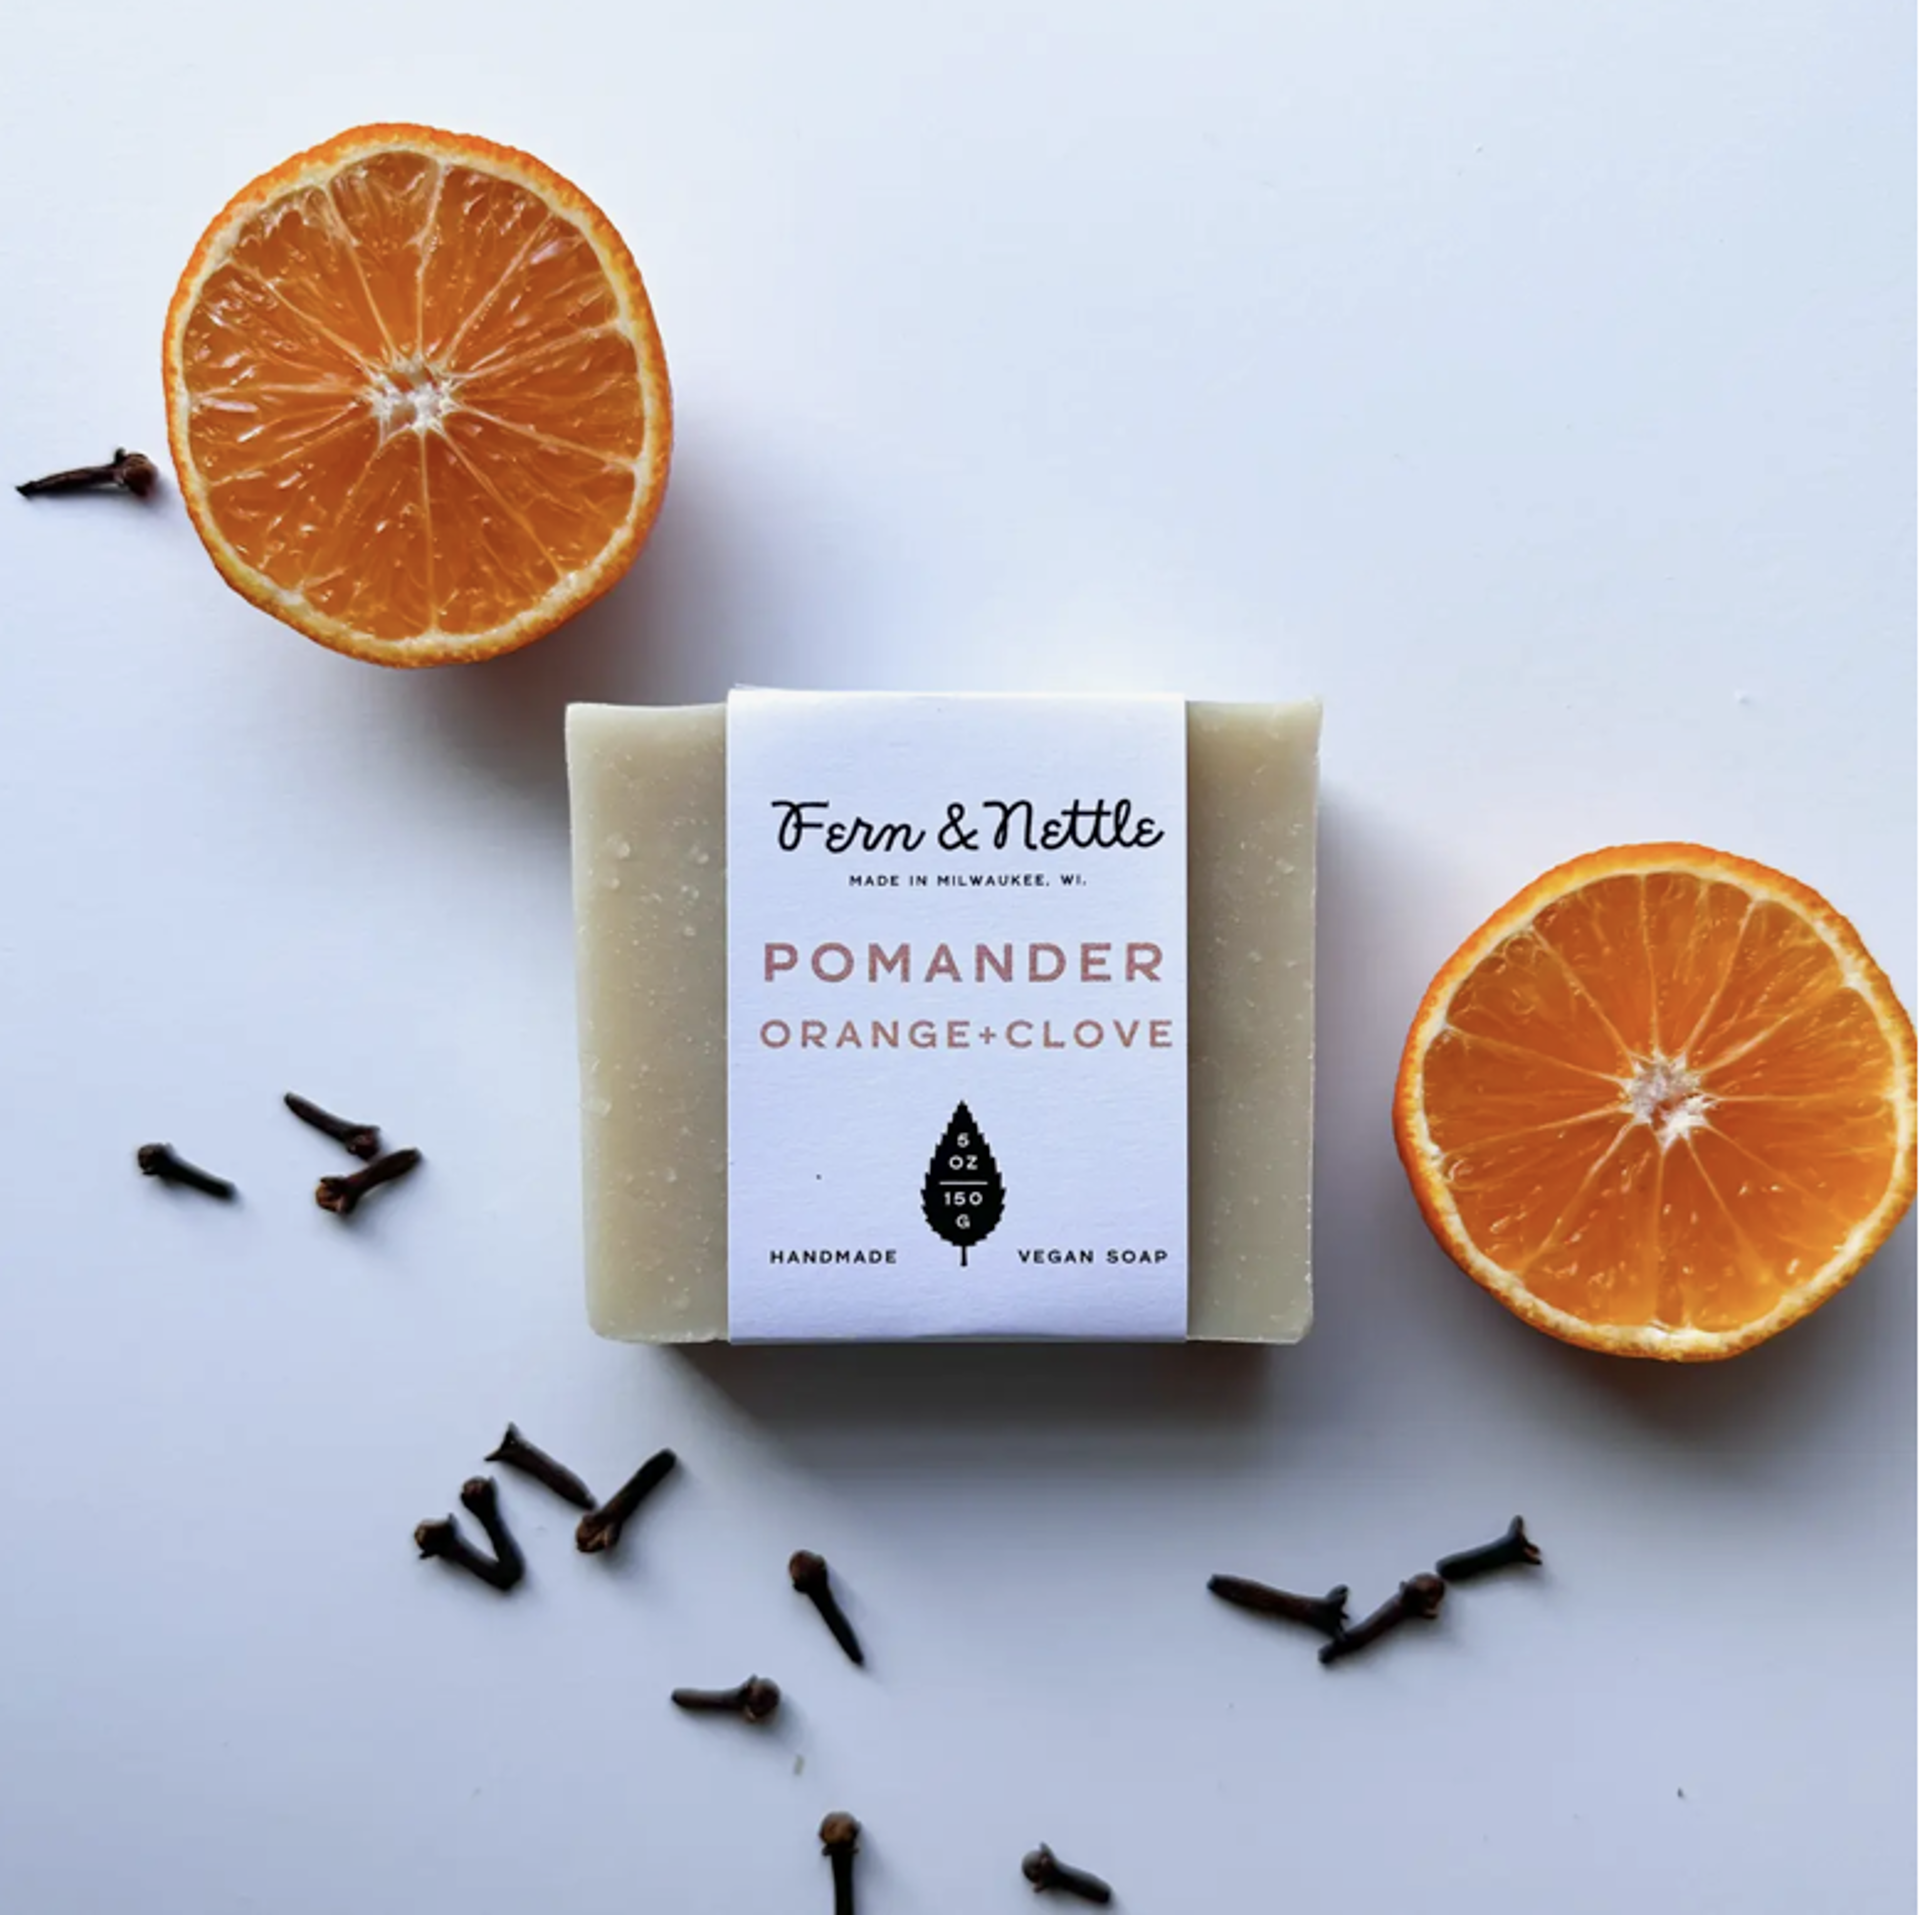 Pomander: Orange + Clove Vegan Soap by Fern & Nettle